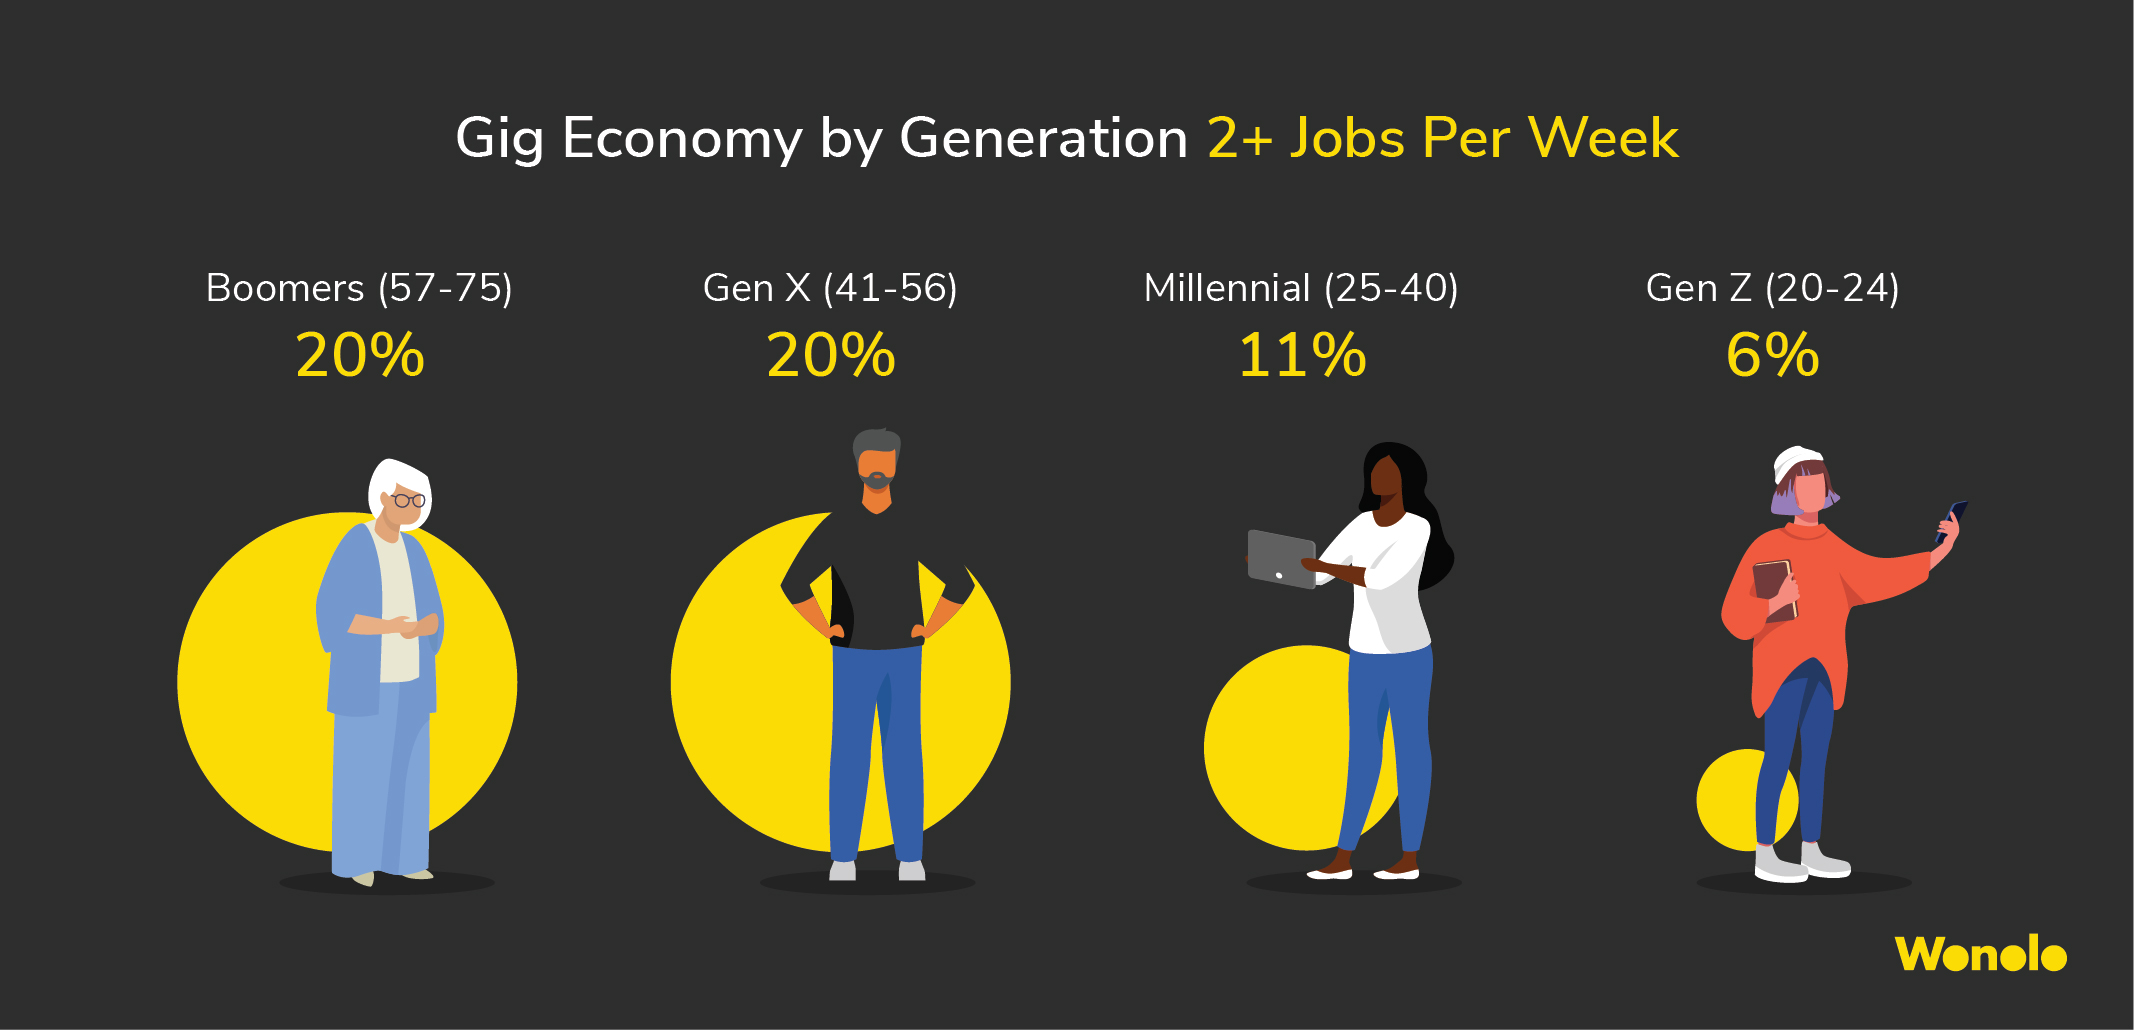 Gig Economy by Generation 